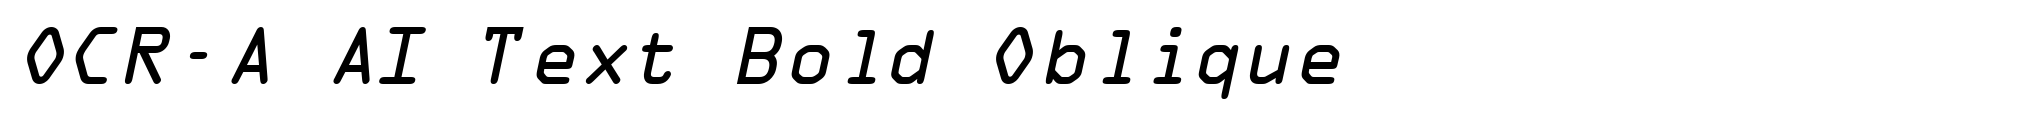 OCR-A AI Text Bold Oblique image